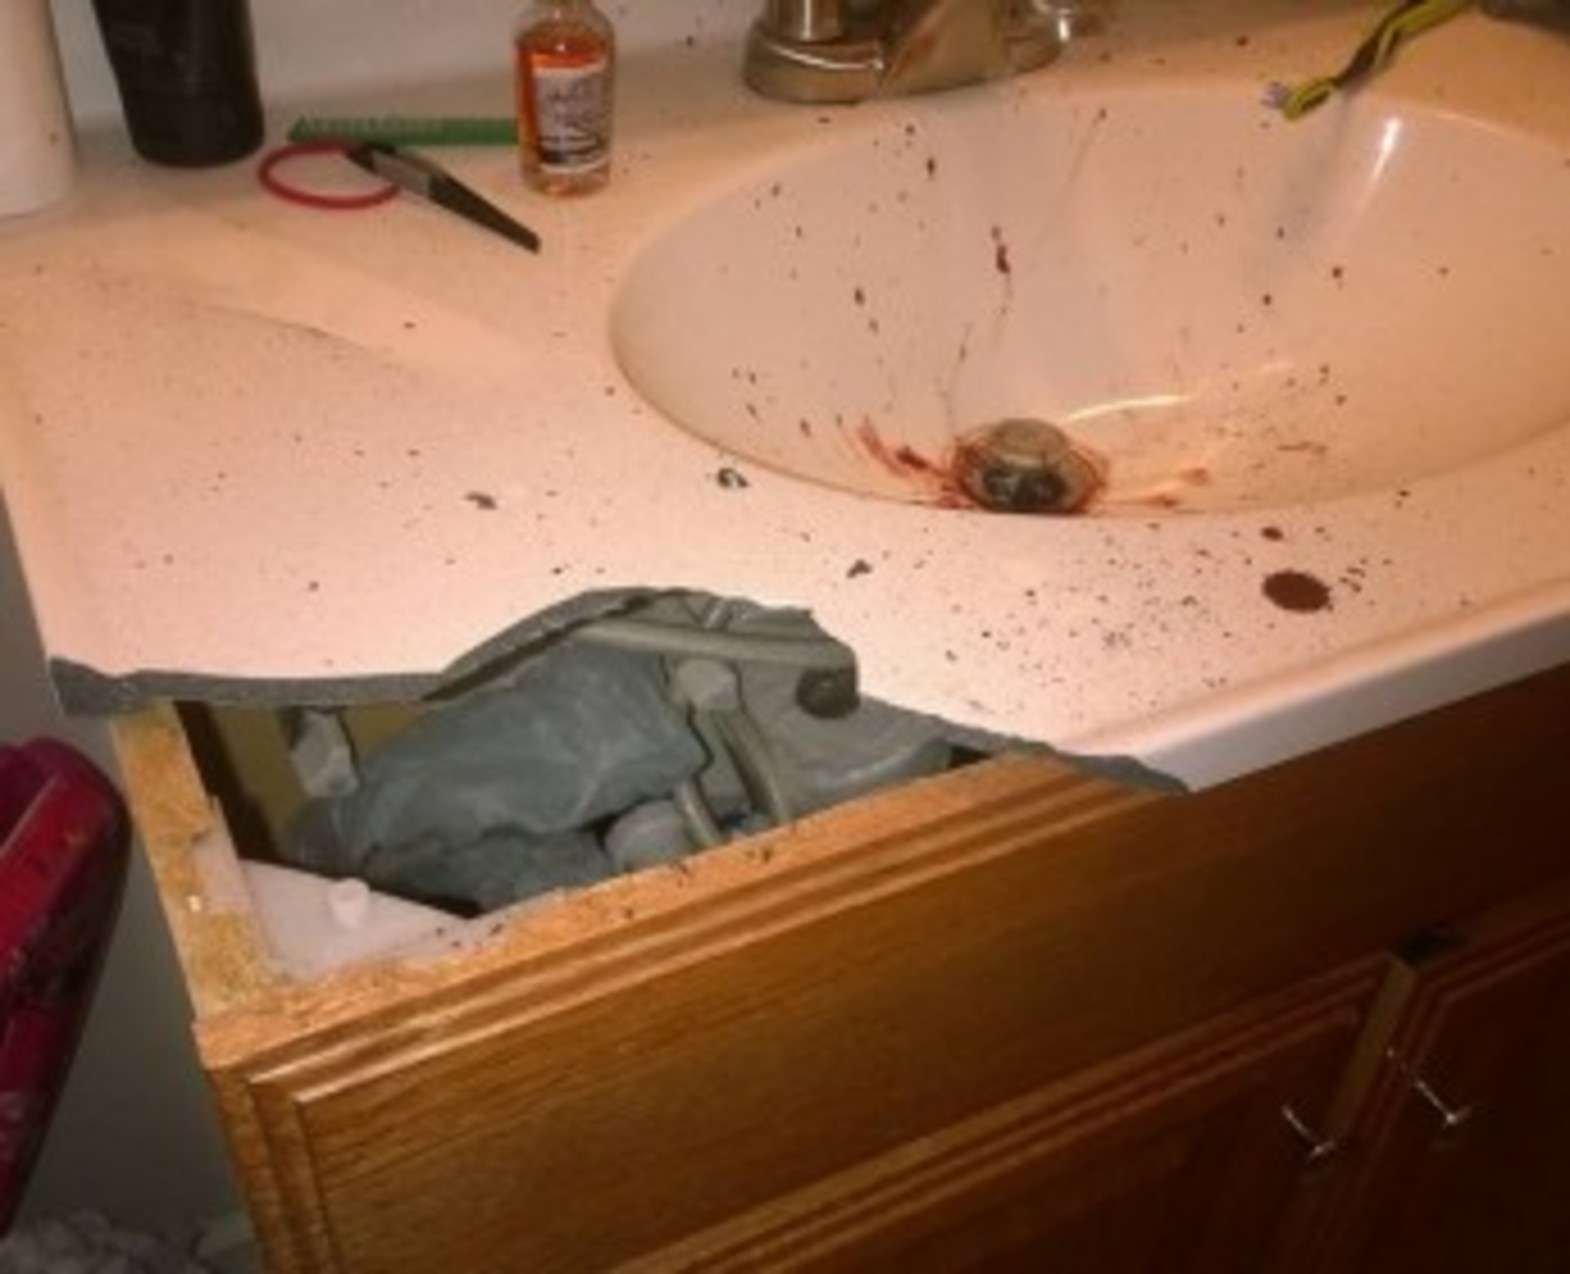 Из-за взрыва в ванной Холла разлетелась раковина